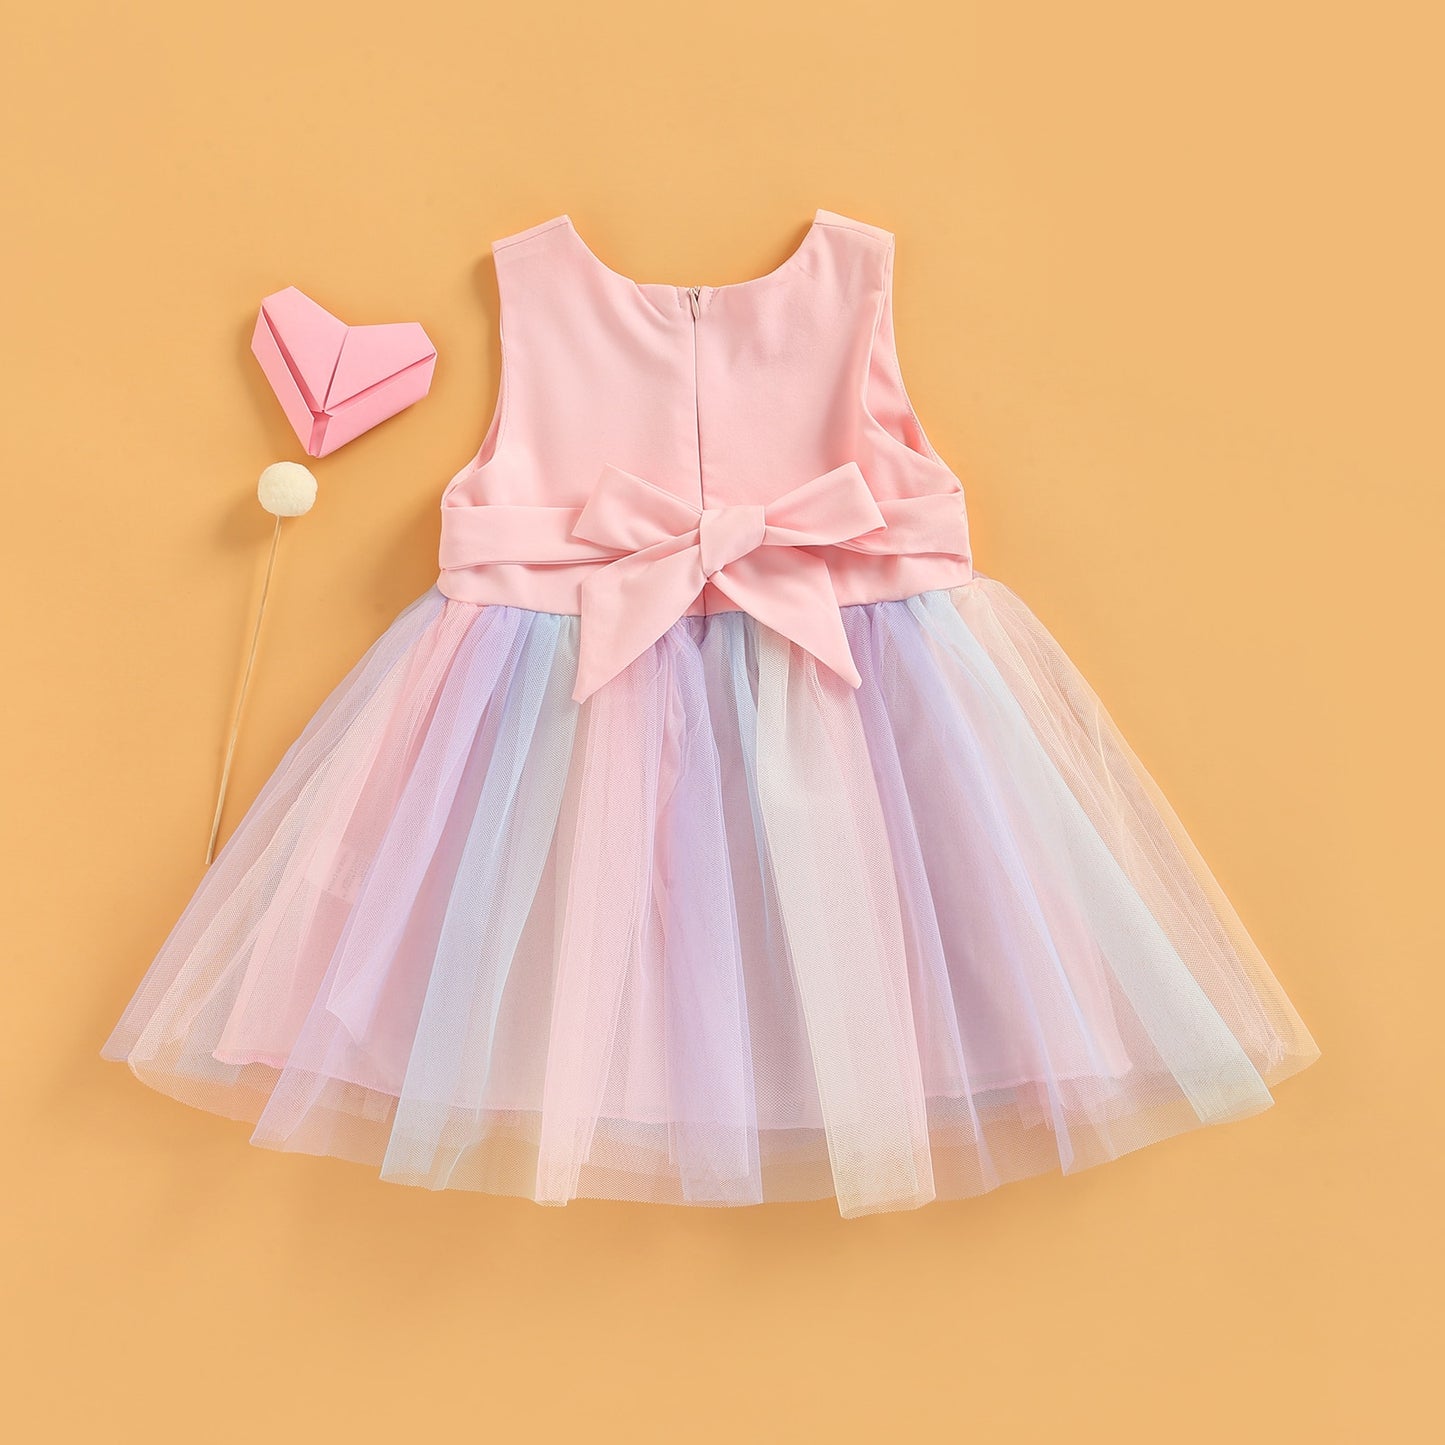 Toddler Kids Baby Girls Princess Dress Sleeveless Bowknot Rainbow Color Party Dress